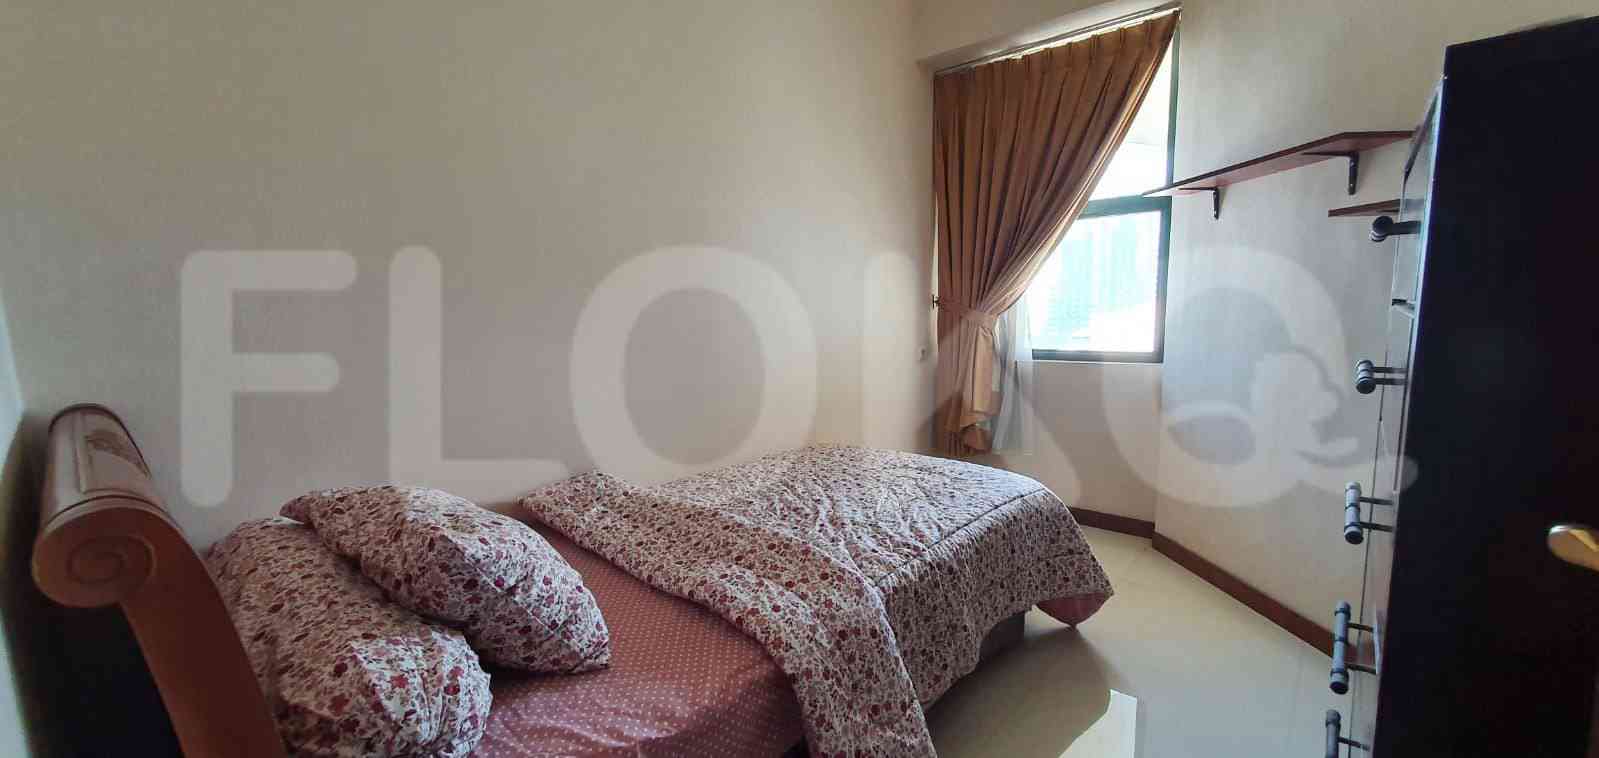 3 Bedroom on 27th Floor for Rent in Aryaduta Suites Semanggi - fsu7eb 4